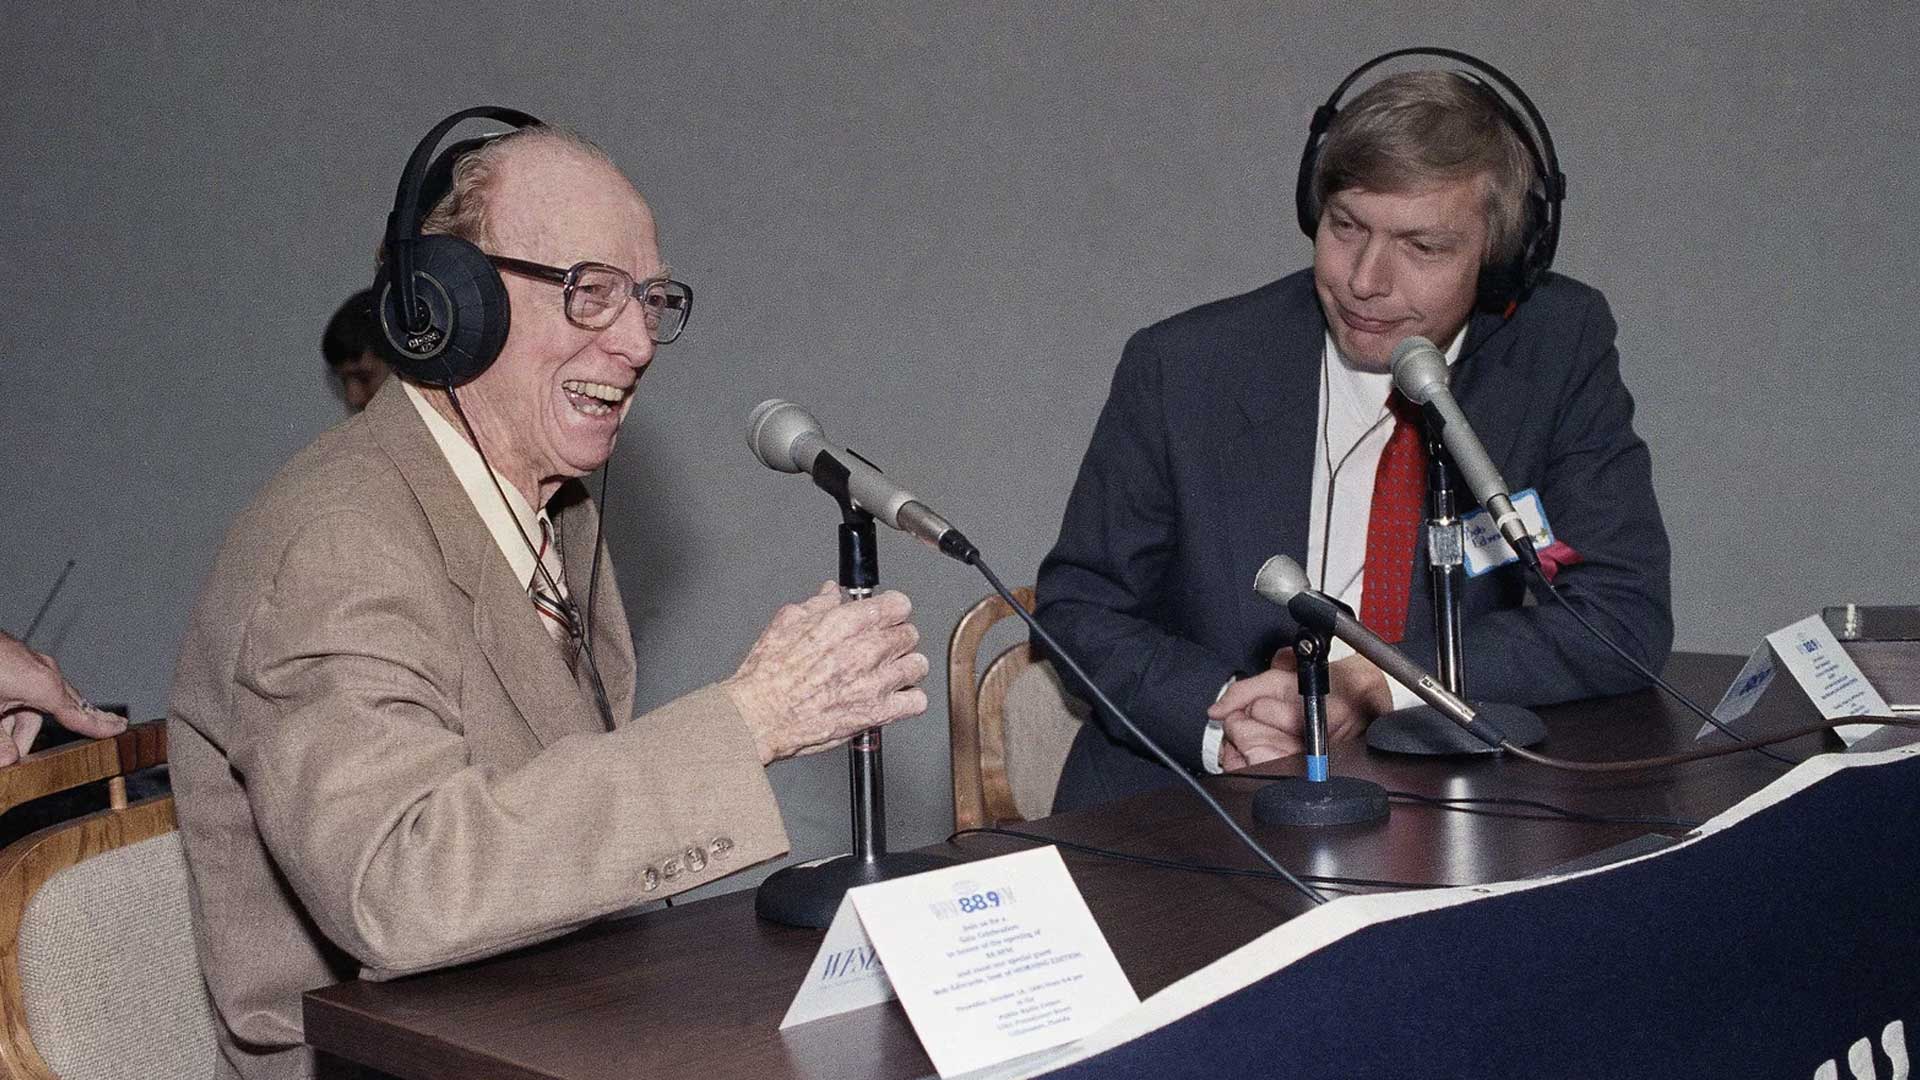 Red Barber and Bob Edwards NPR hero